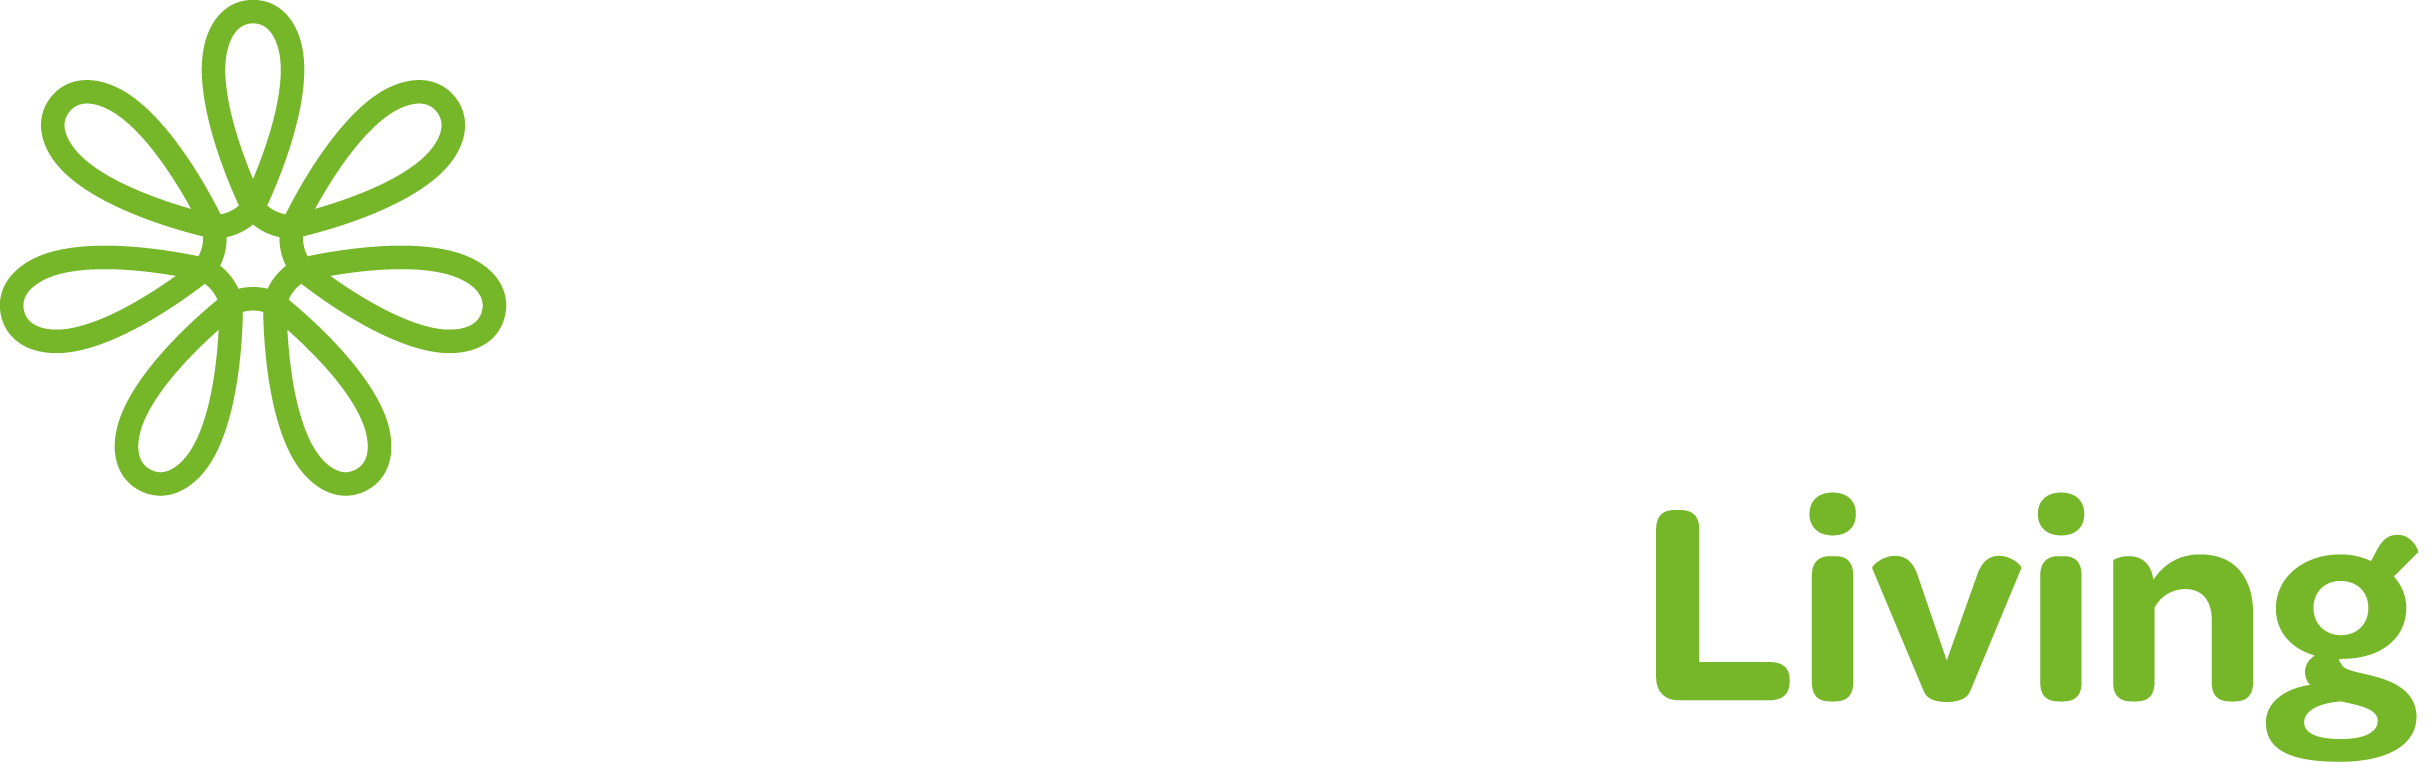 everyday living logo